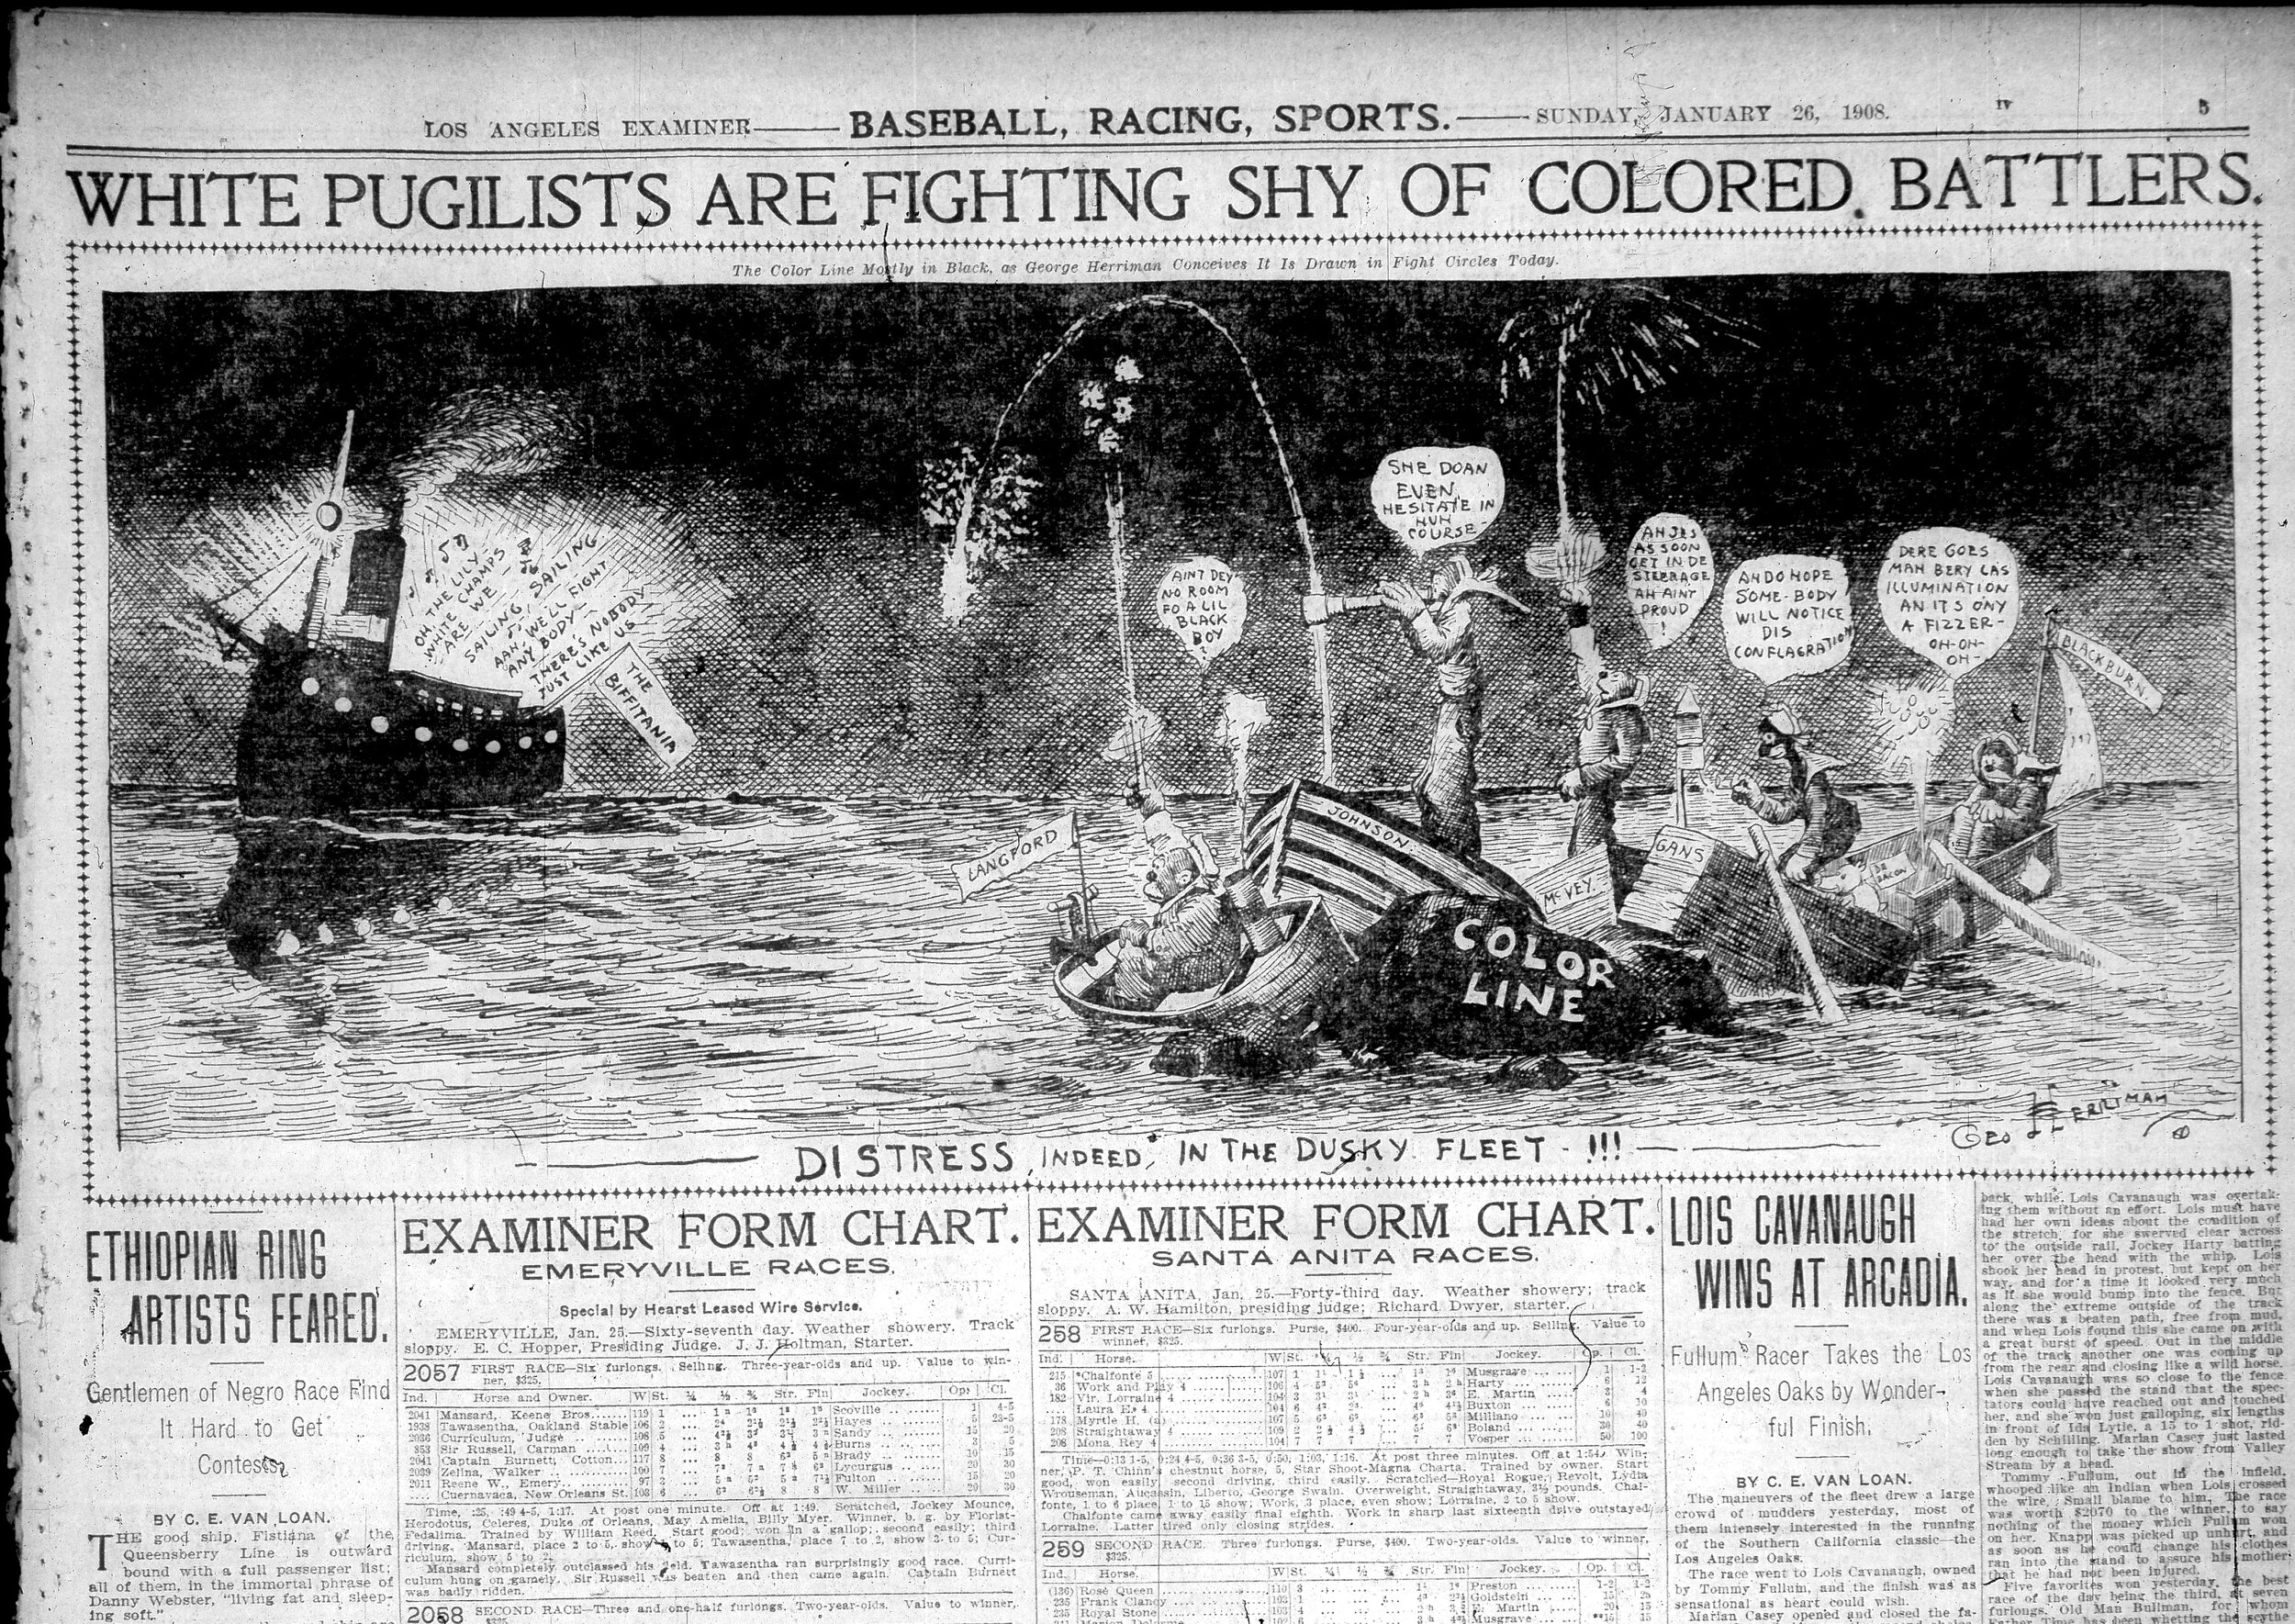 11-laexaminer-01-26-1908-herriman-sports-comic-on-color-line-.jpg